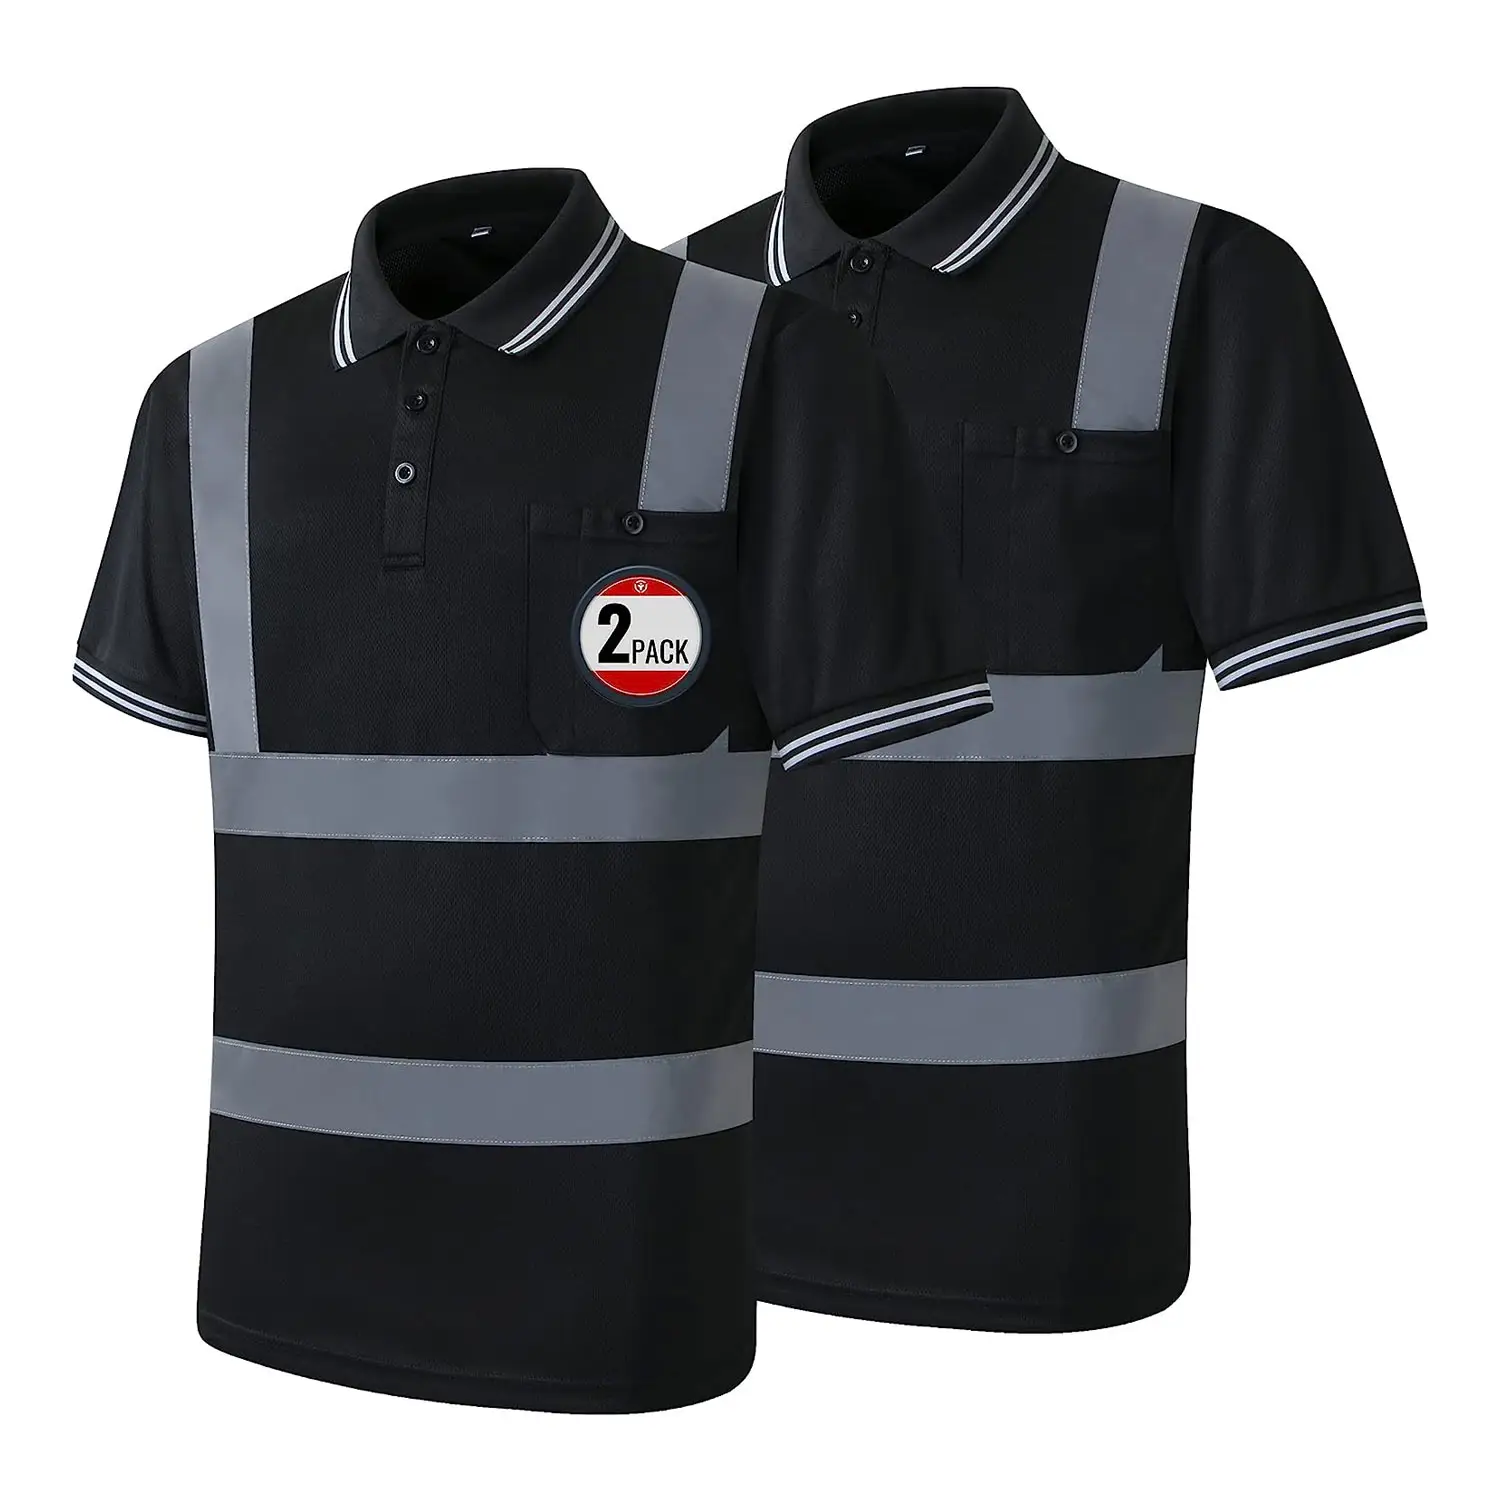 Kaus Polo hitam keamanan kaus visibilitas tinggi dengan saku kustom pabrik diproduksi grosir perusahaan untuk pakaian kerja